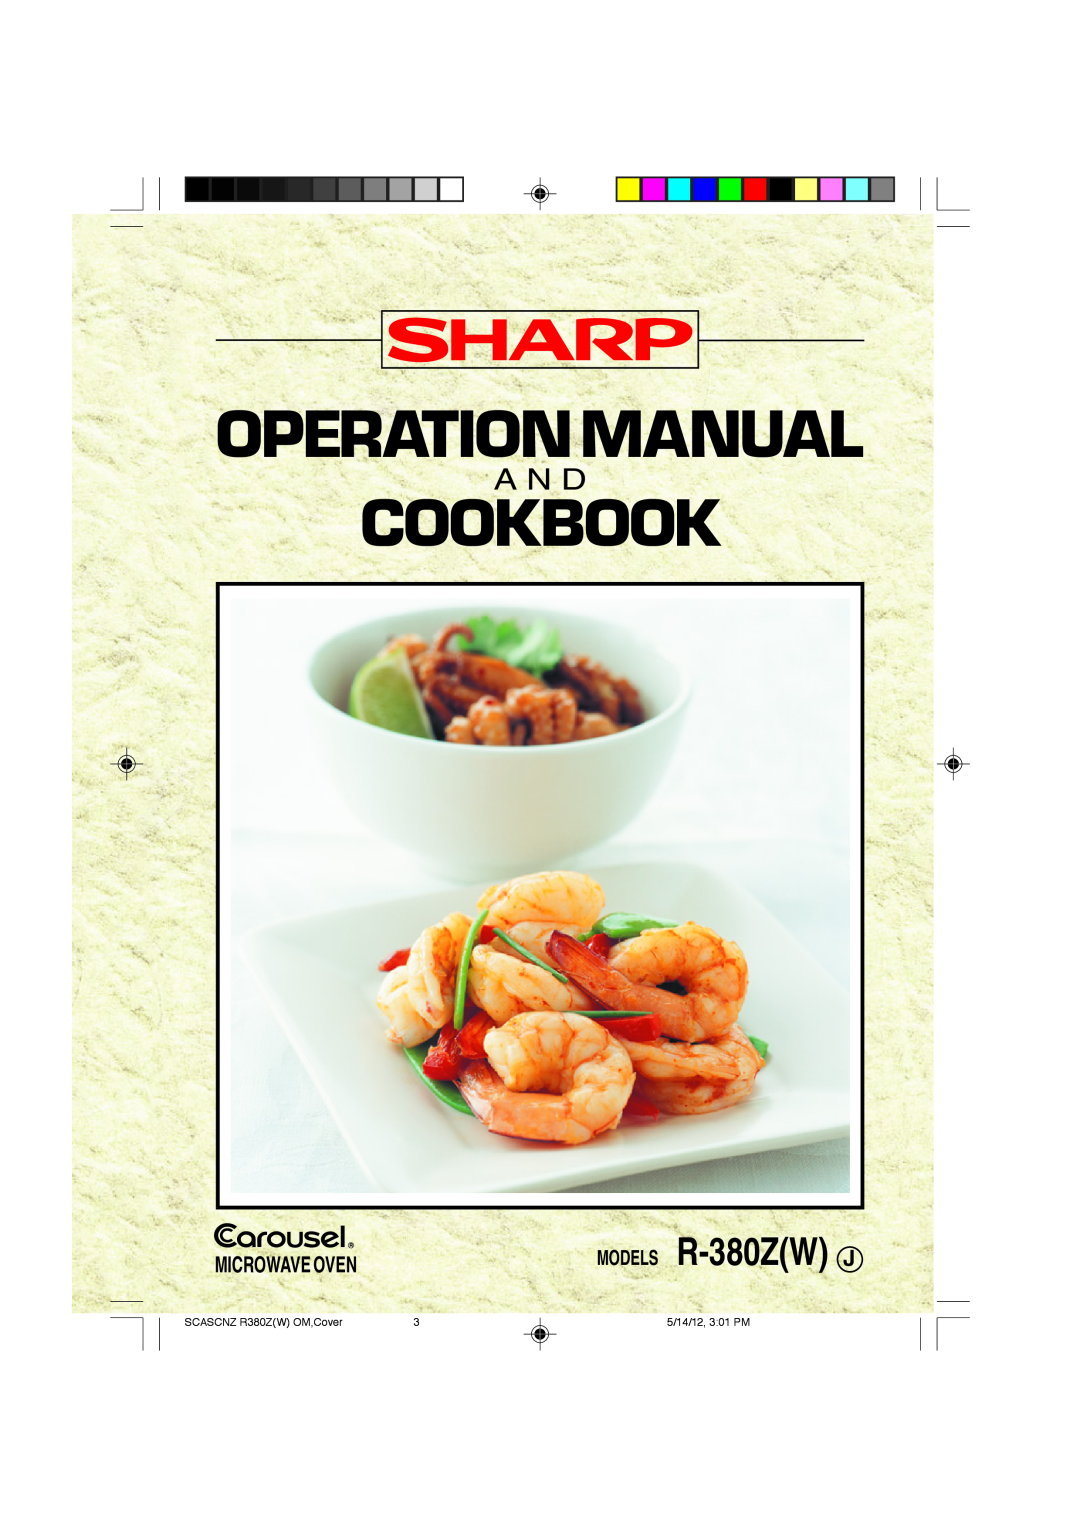 Sharp R-380Z(W) operation manual Cookbook, MODELS R-380ZW J, A N D, Microwaveoven 